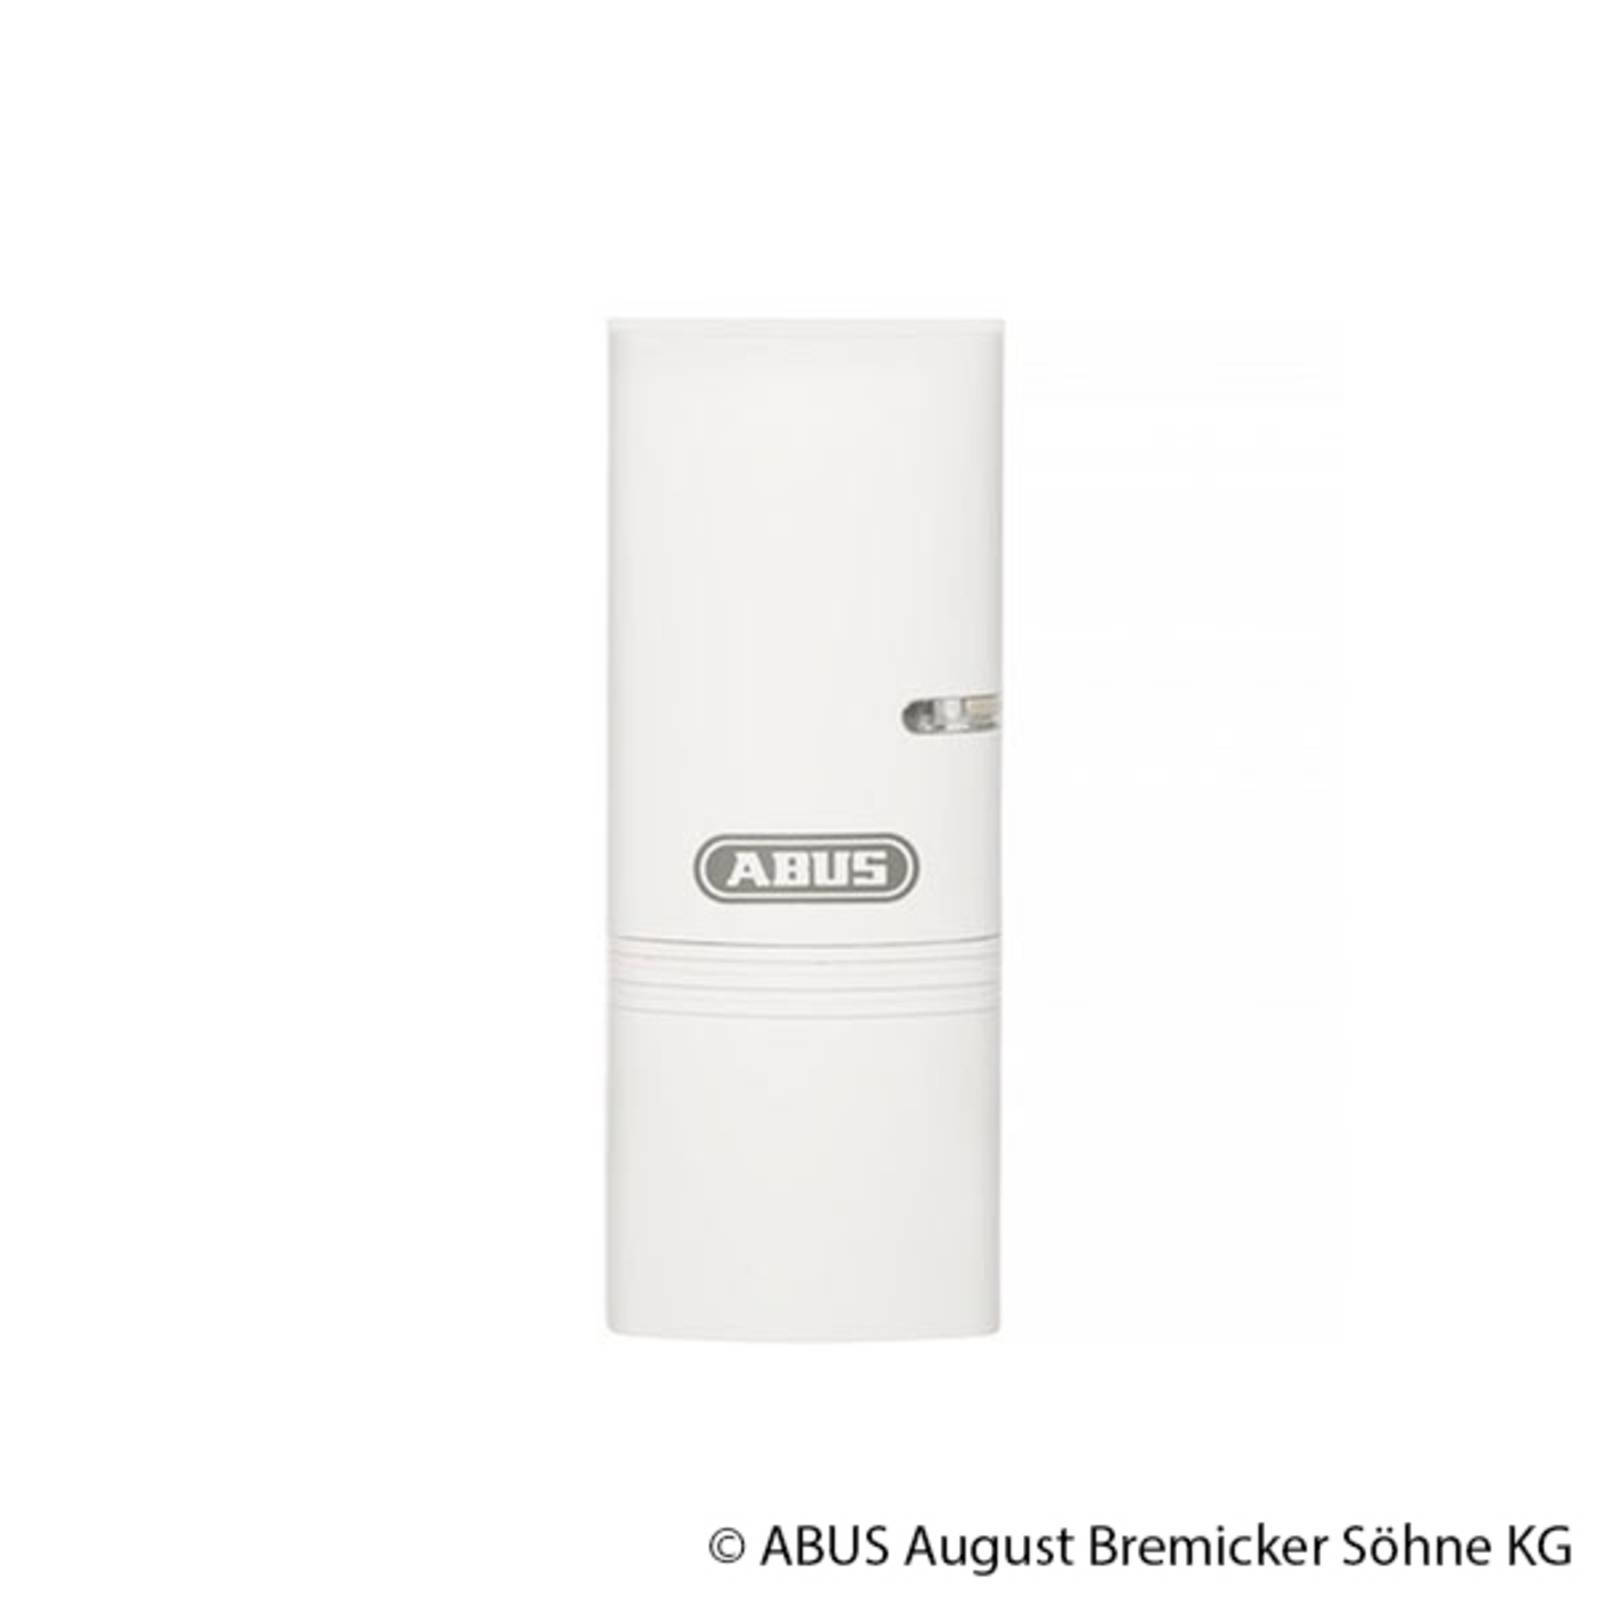 ABUS Smartvest trådlös vibrationsdetektor